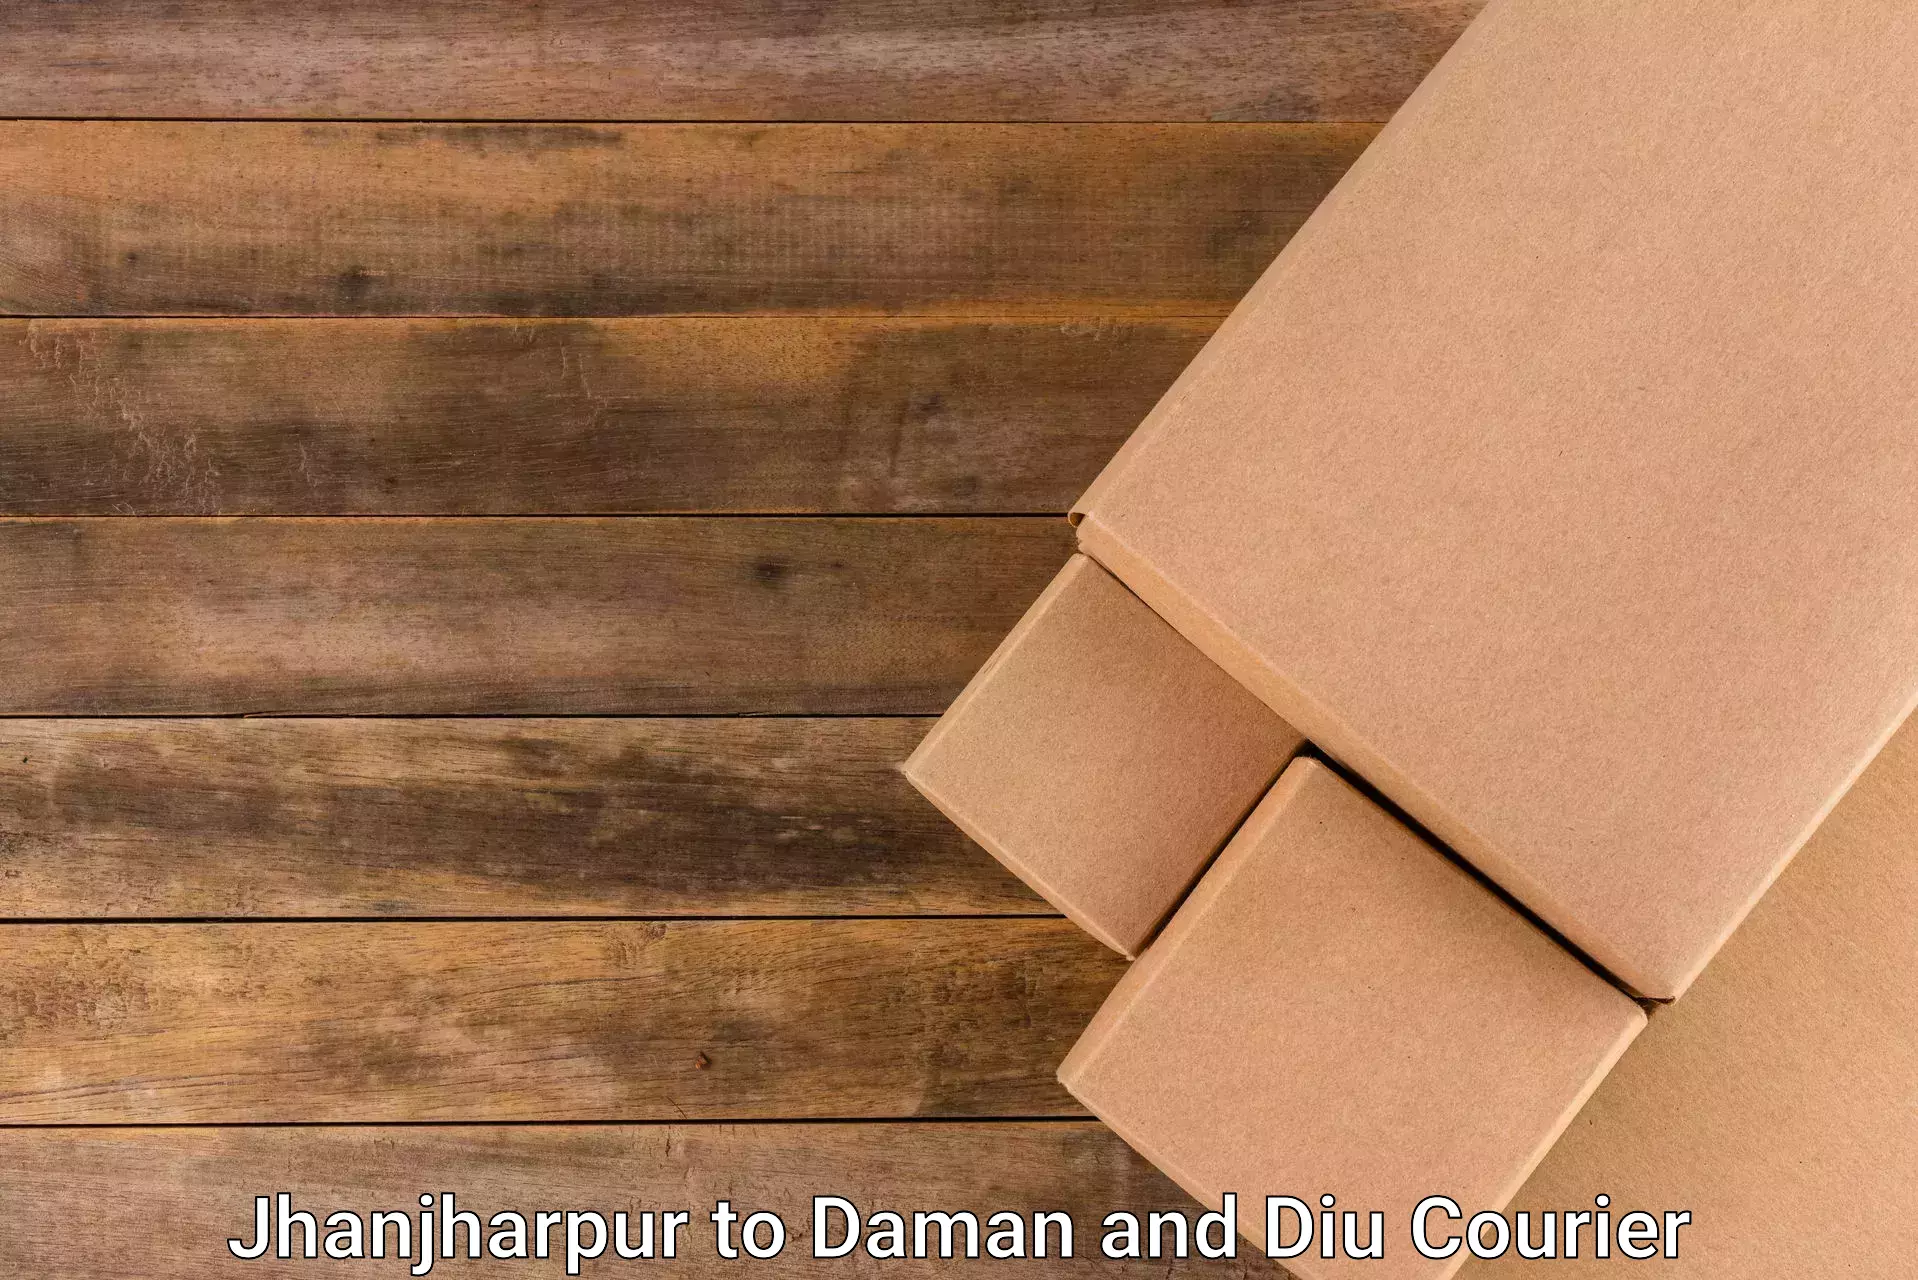 Supply chain efficiency Jhanjharpur to Daman